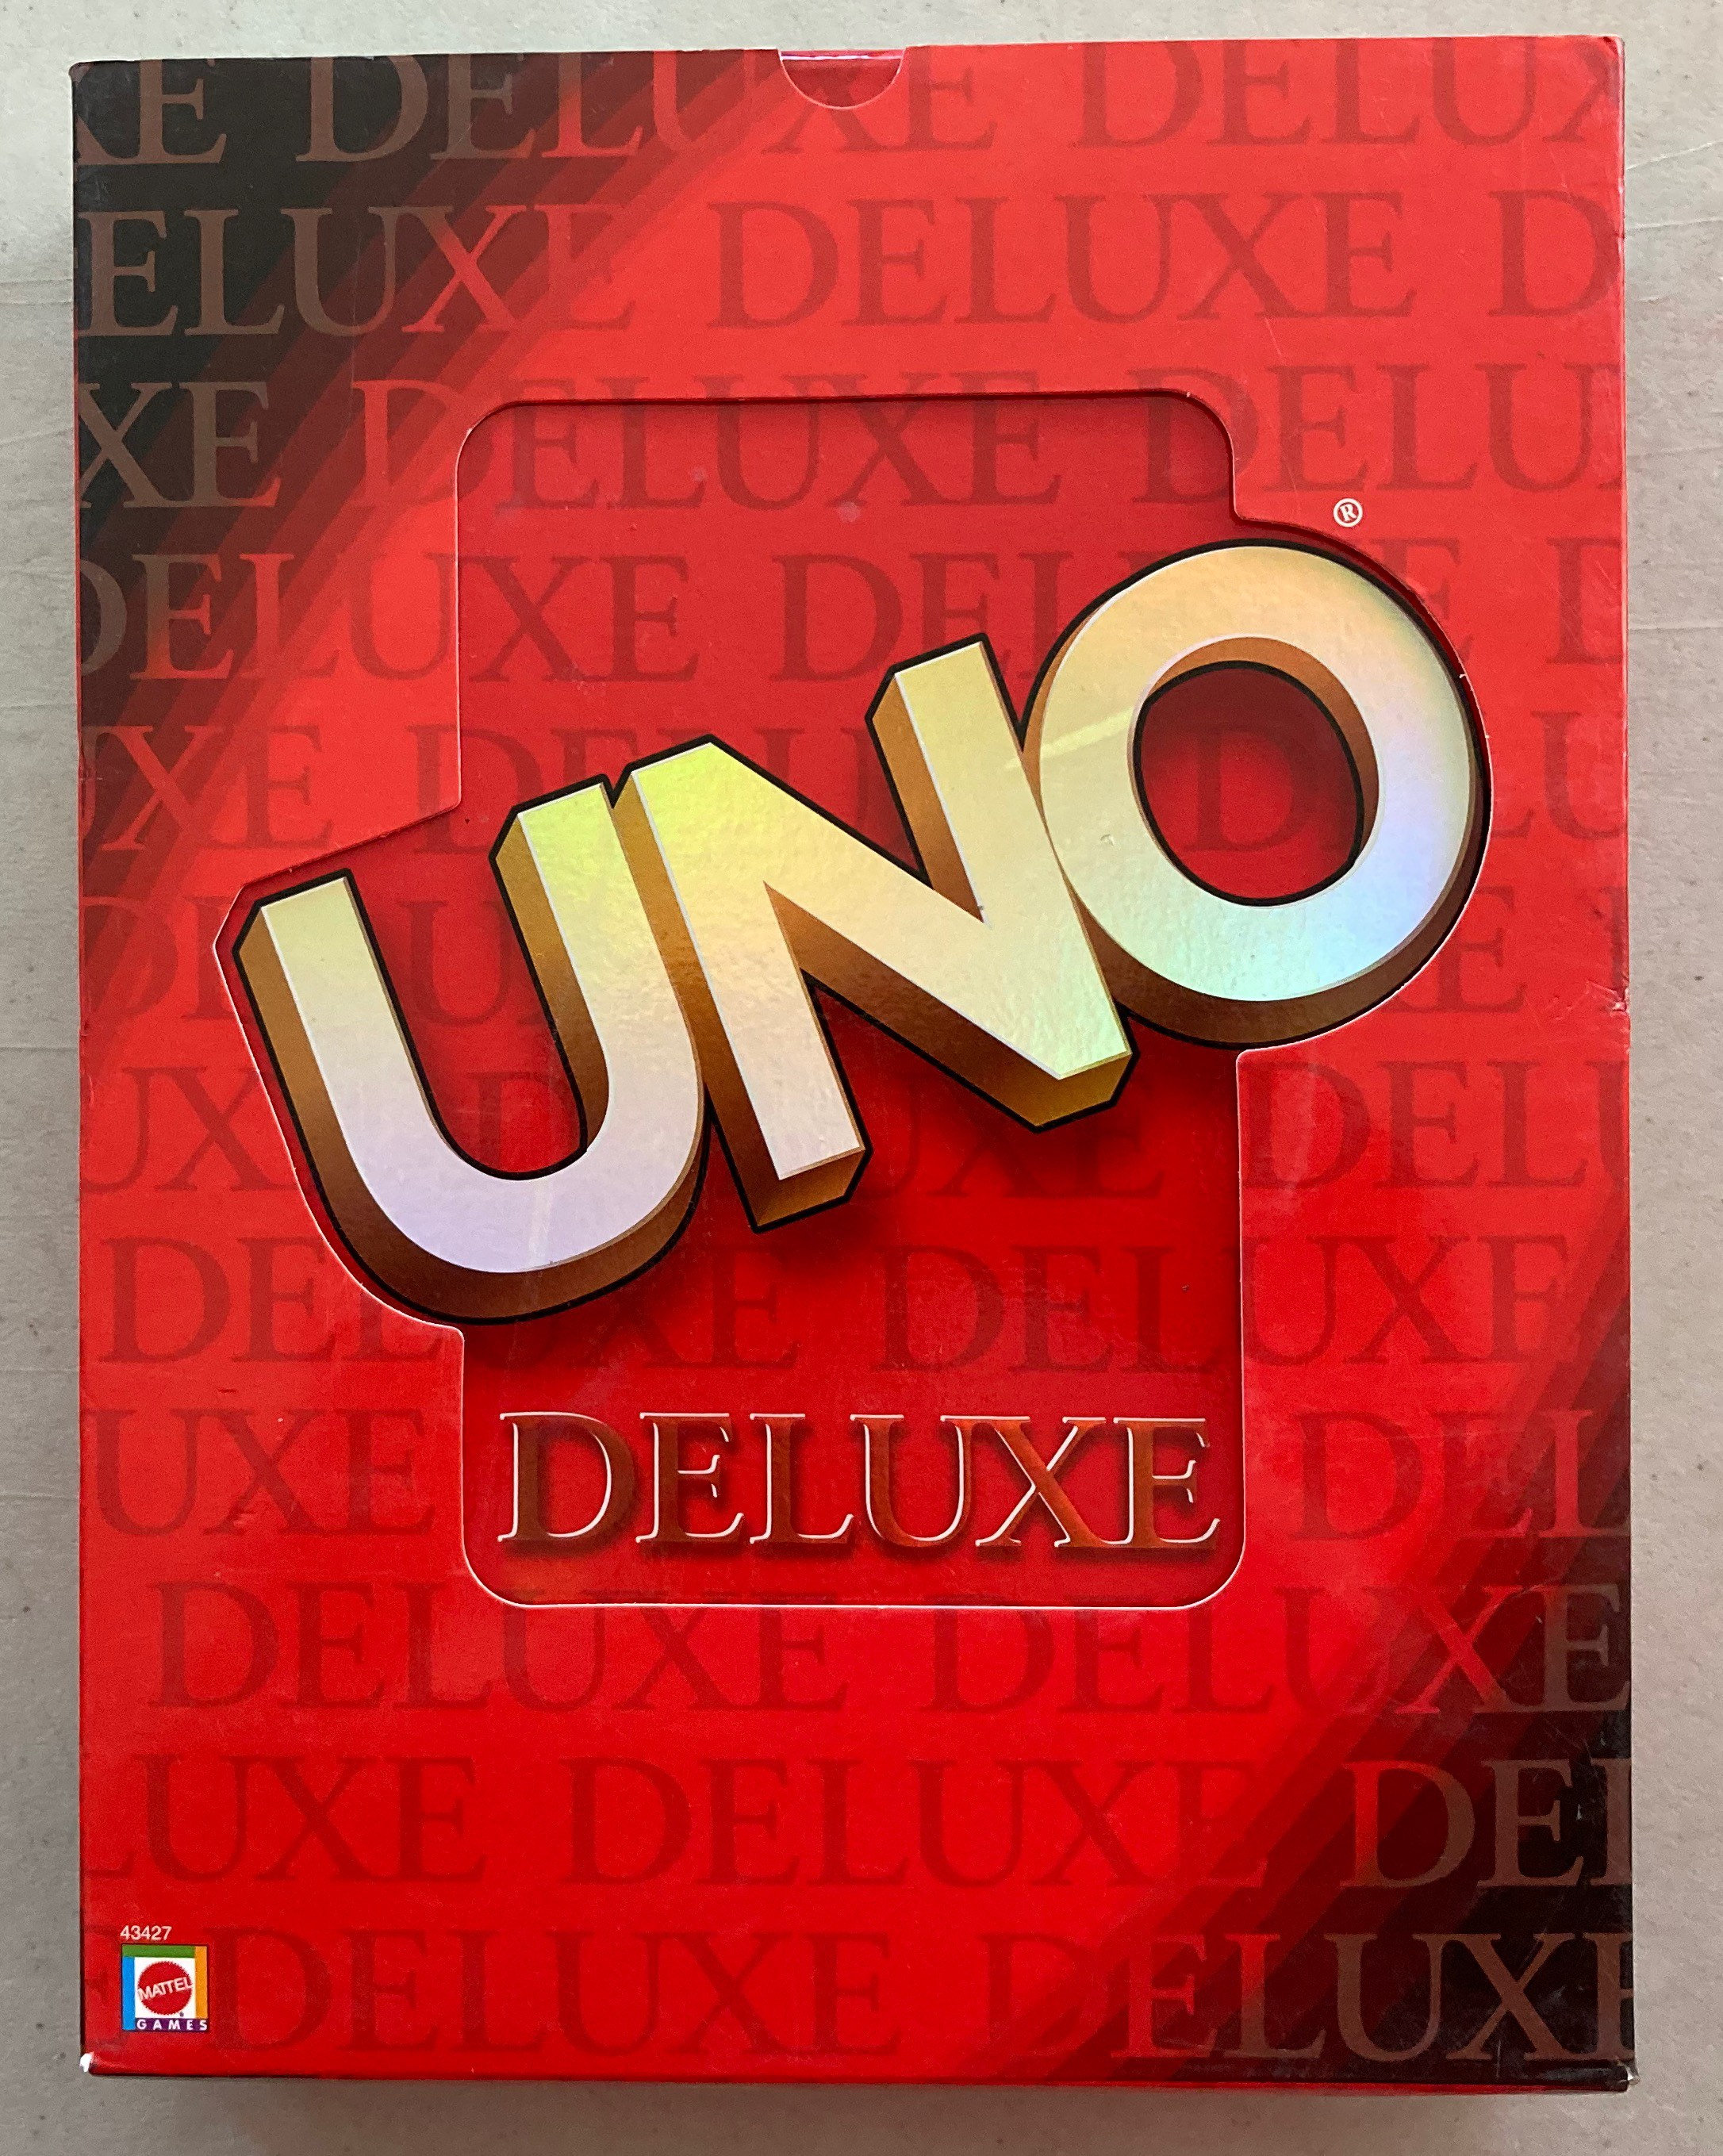 Buy Vintage 2001 UNO DELUXE Game by Mattel Online in India 